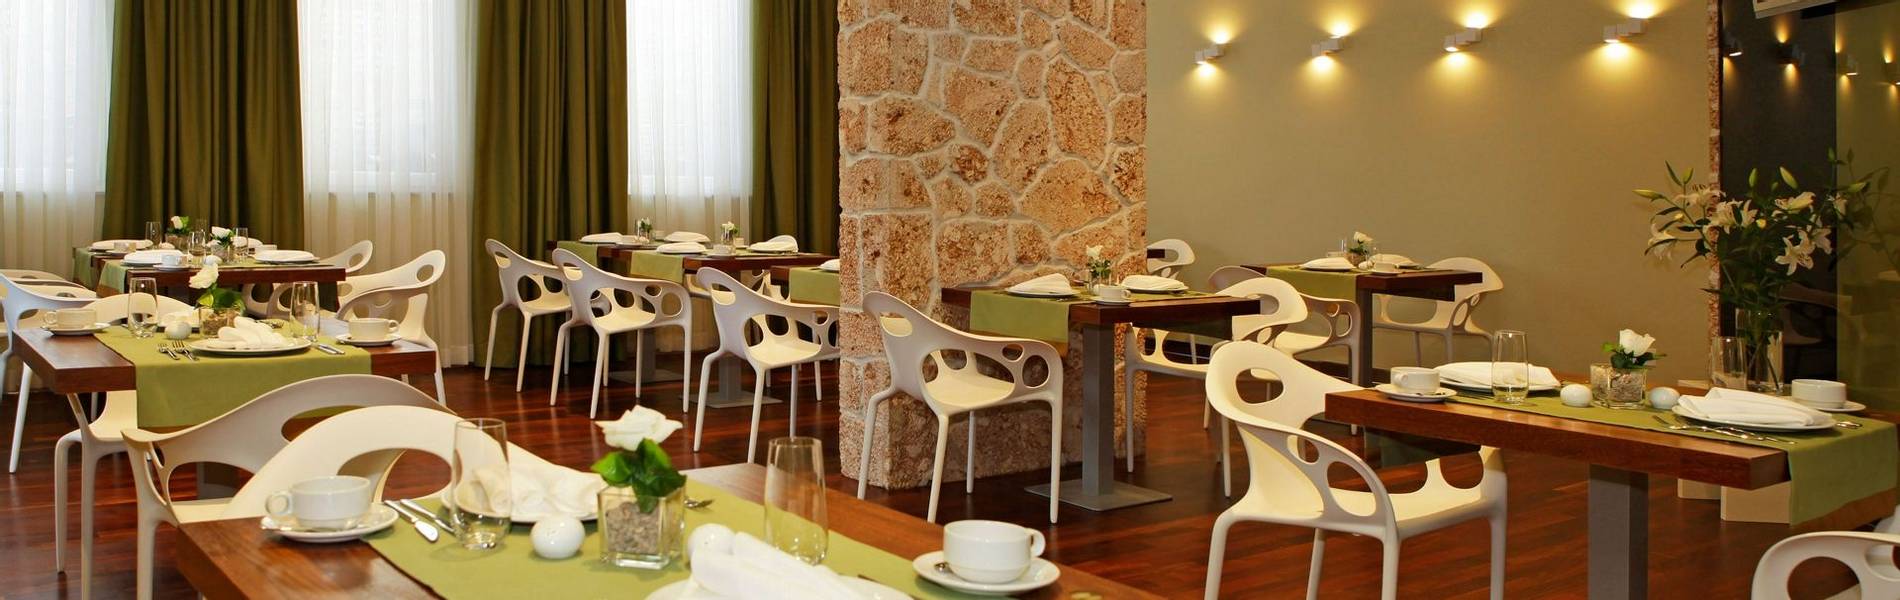 Hotel Bol, Central Dalmatia, Croatia (37).jpg